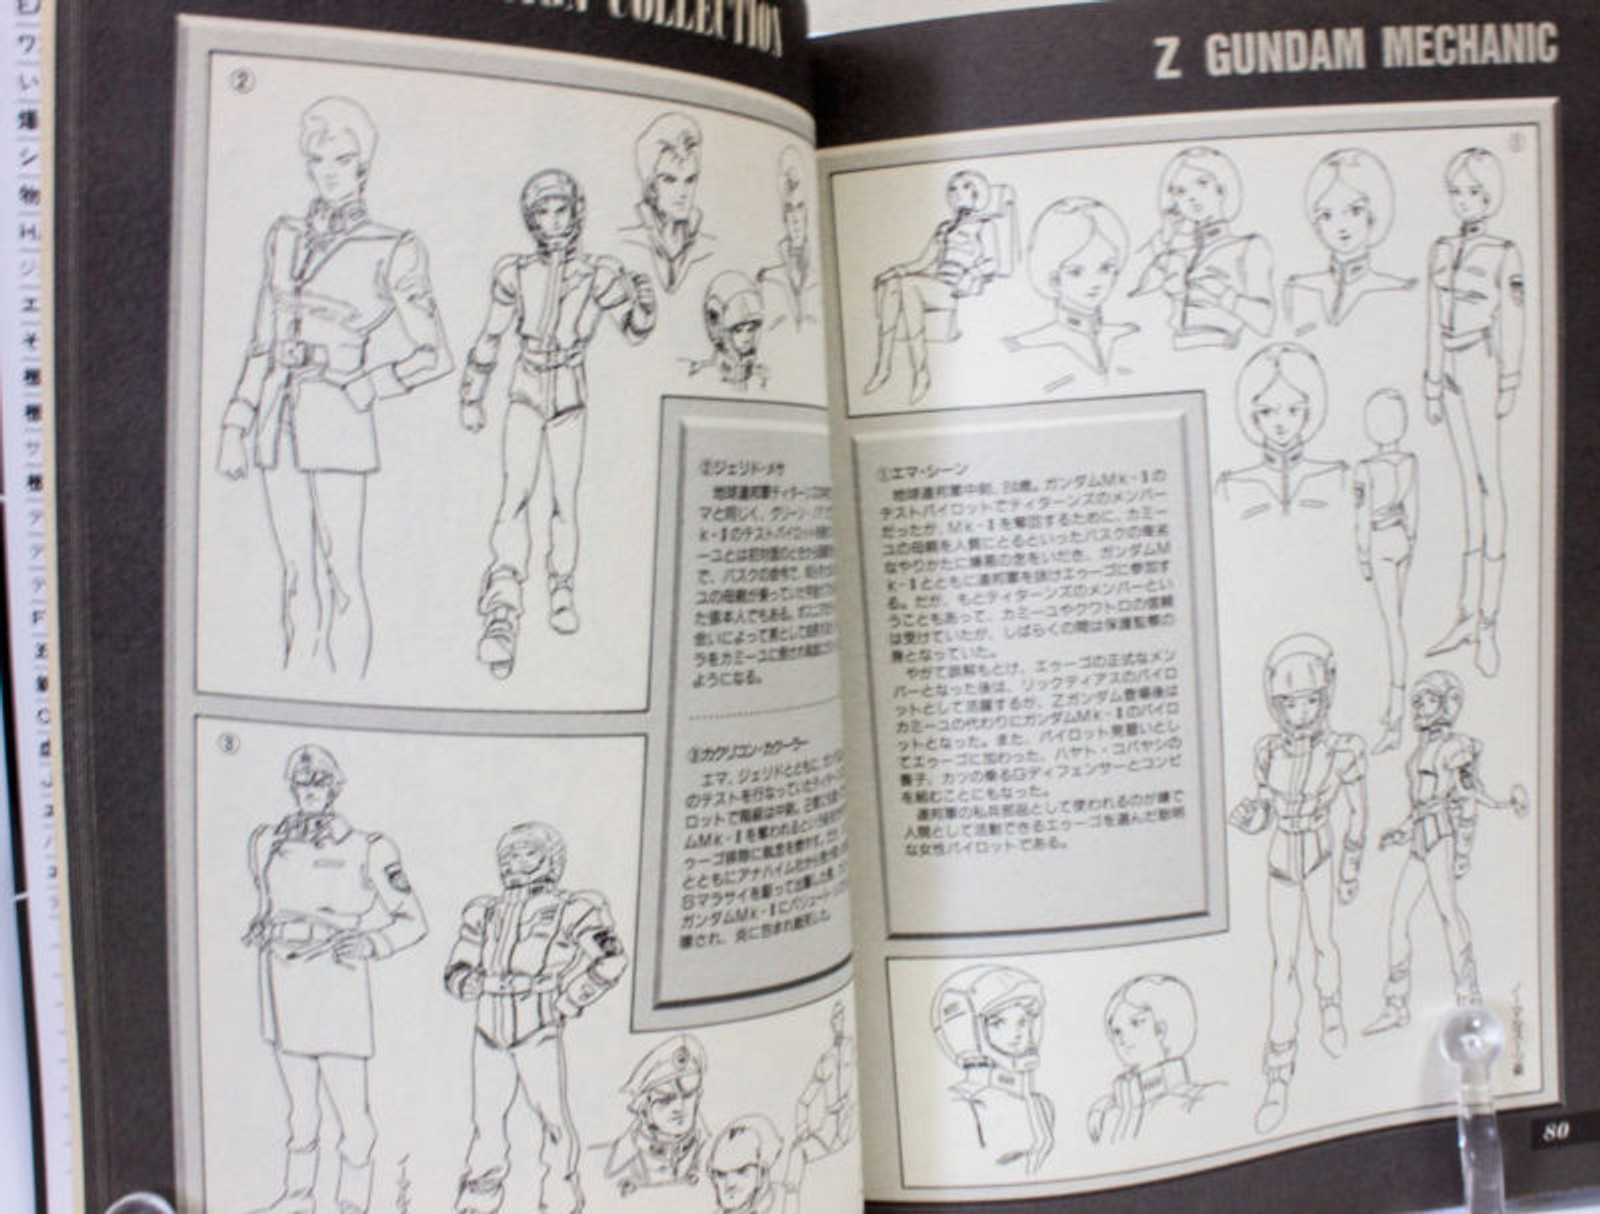 Zeta Gundam Vol.1 Date Collection #4 Illustration Art Book JAPAN ANIME